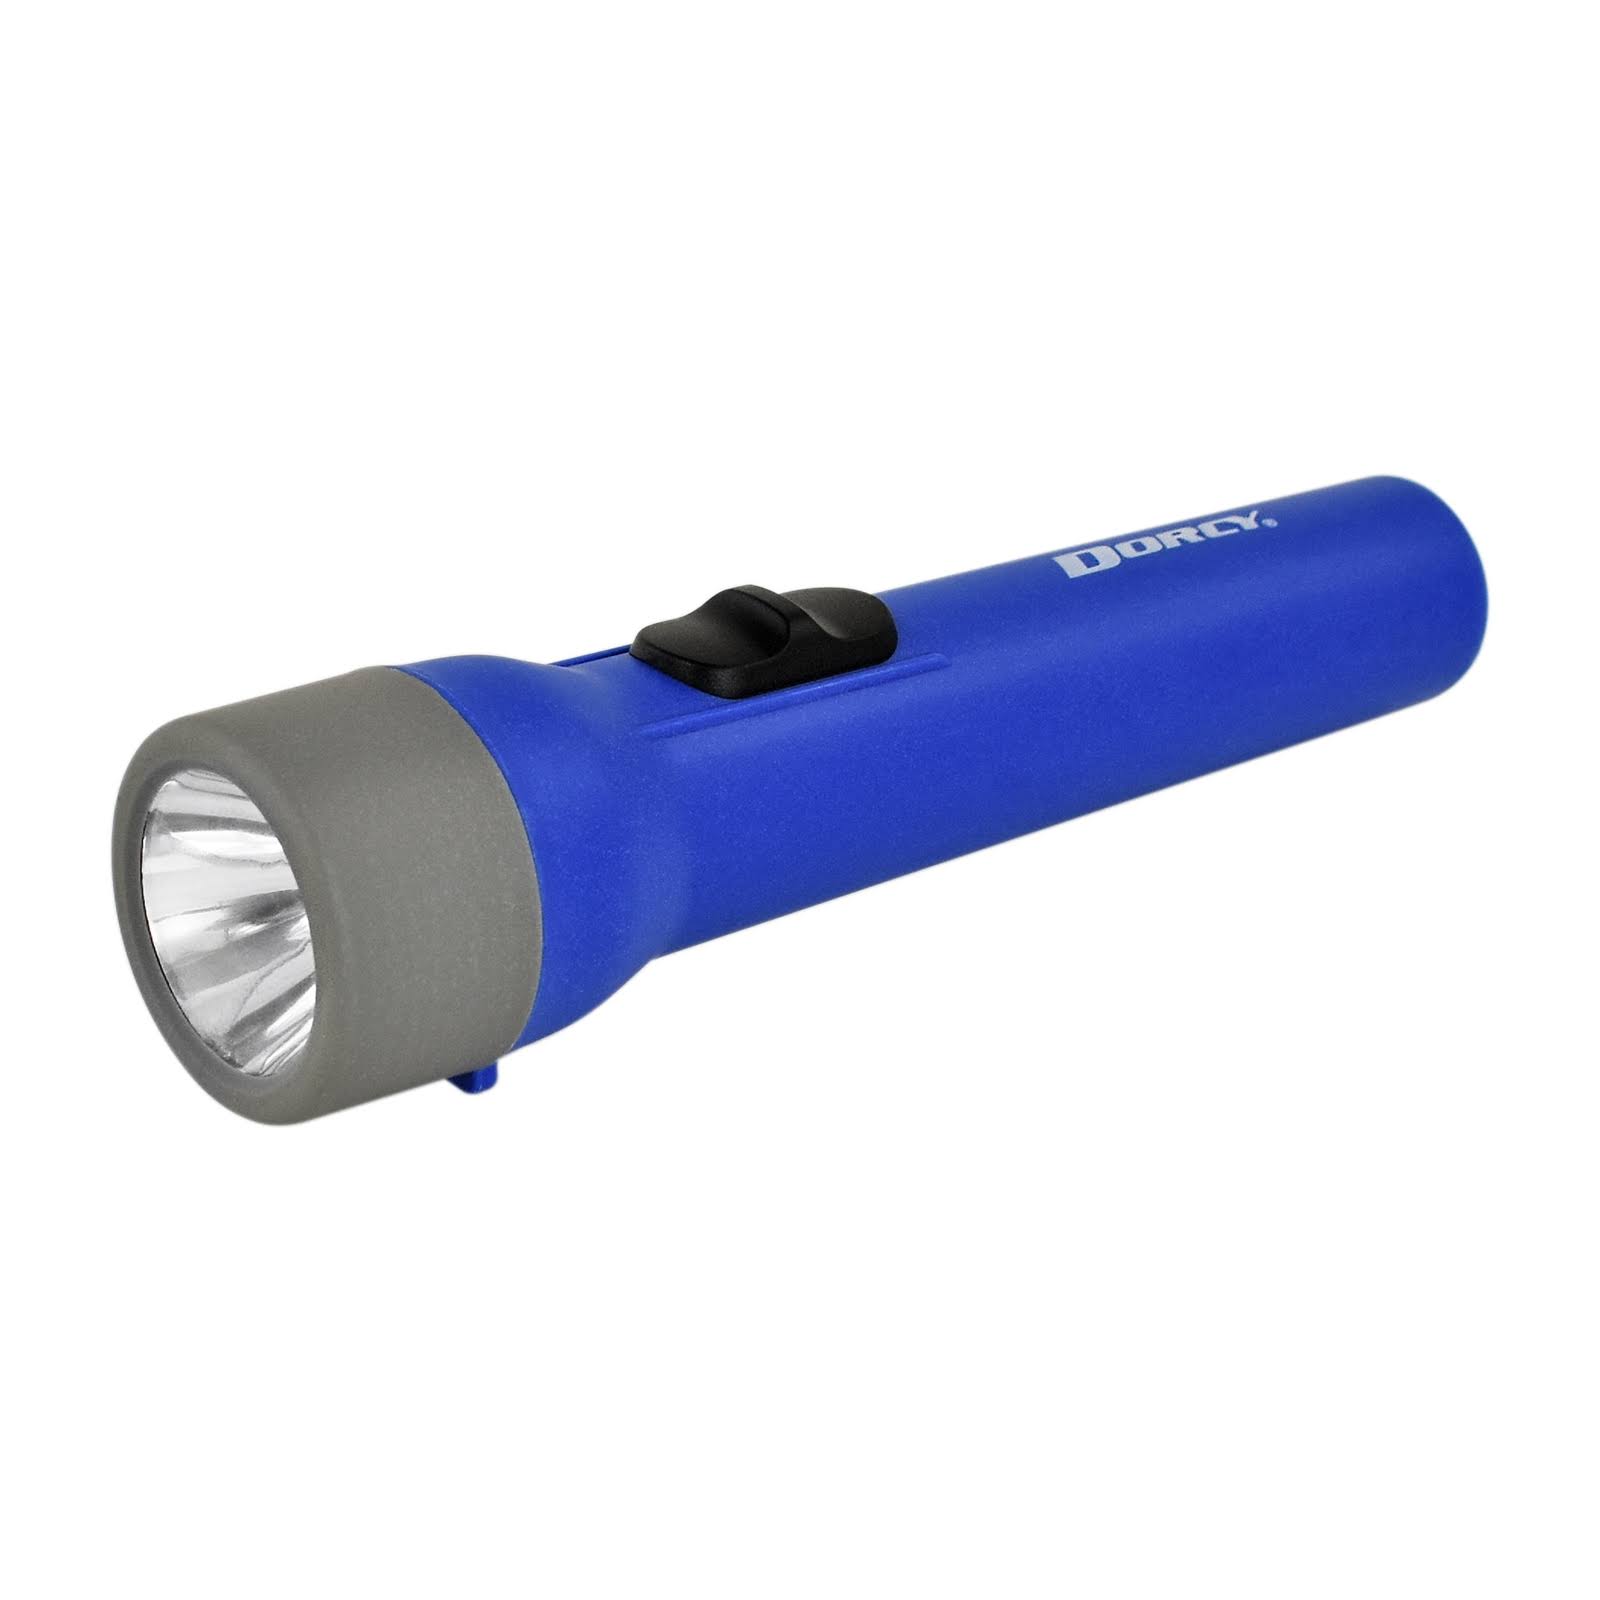 Dorcy Deluxe High Impact Resin LED Flashlight - 25-Lumens, Blue